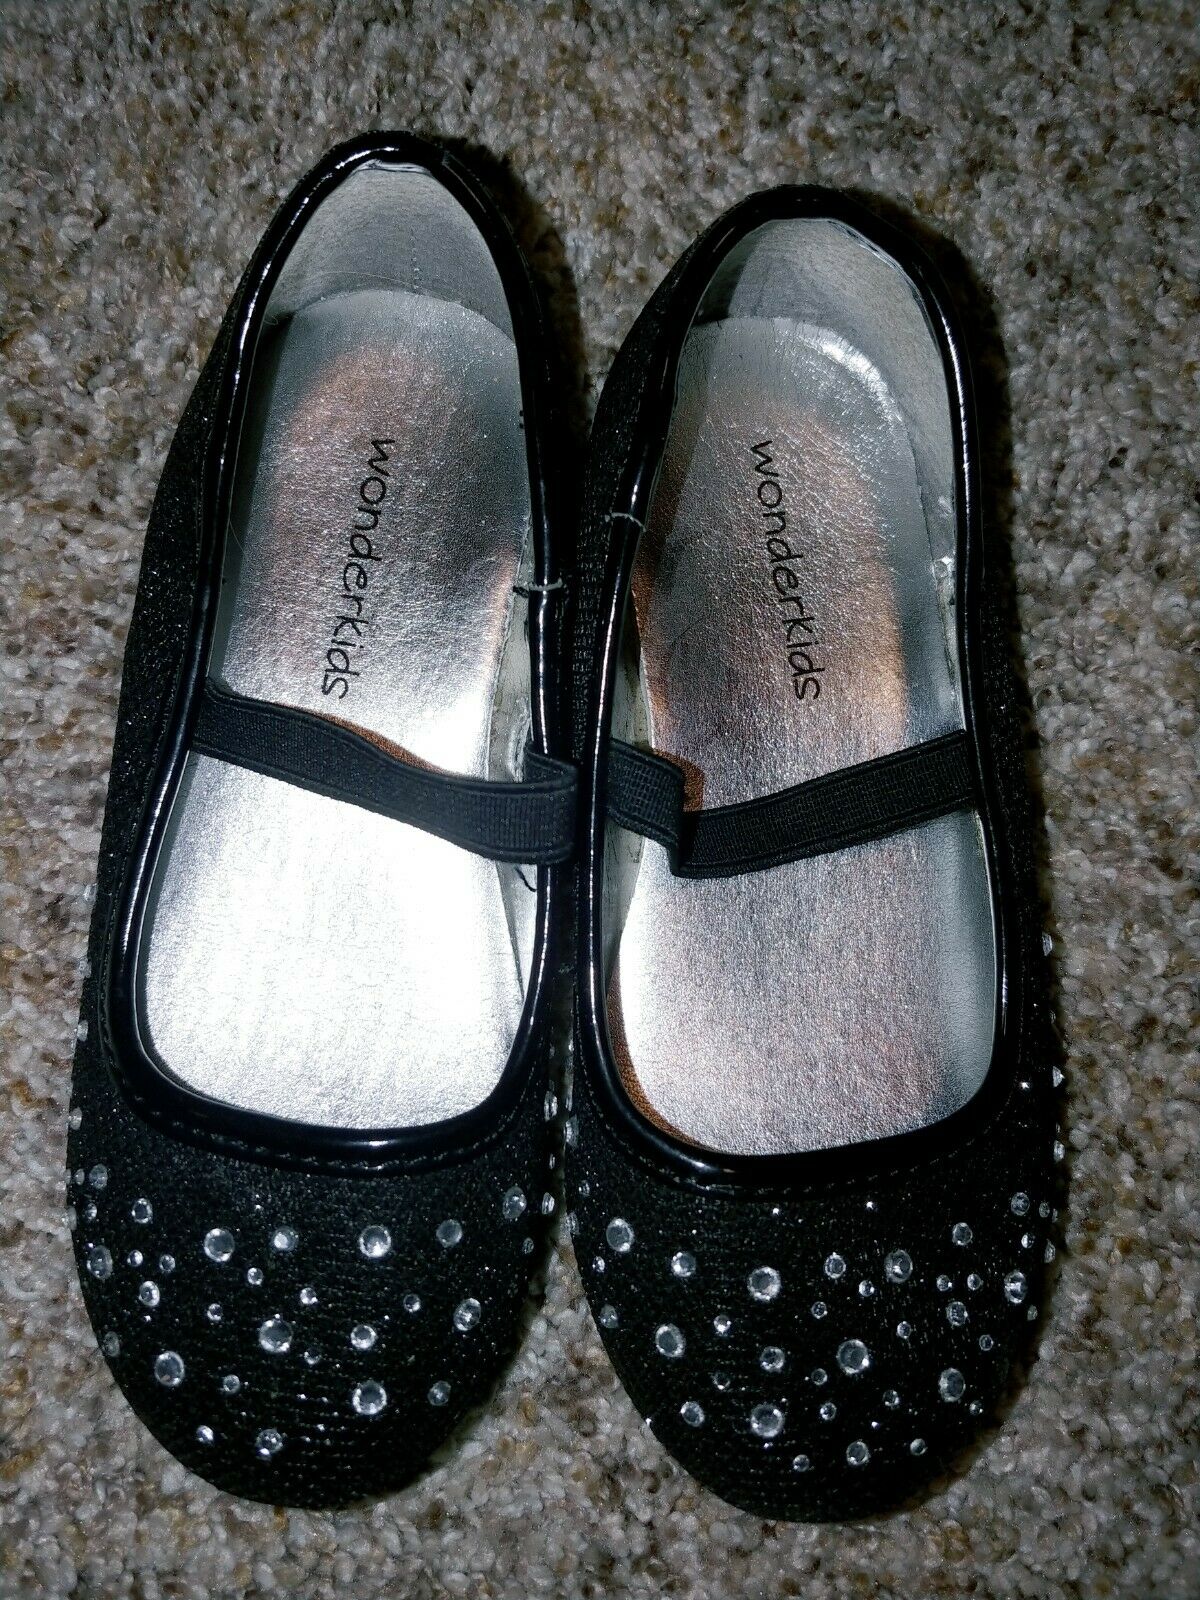 Girls Toddler Dress Shoes Black Flats W/ Rhinestones Size 9